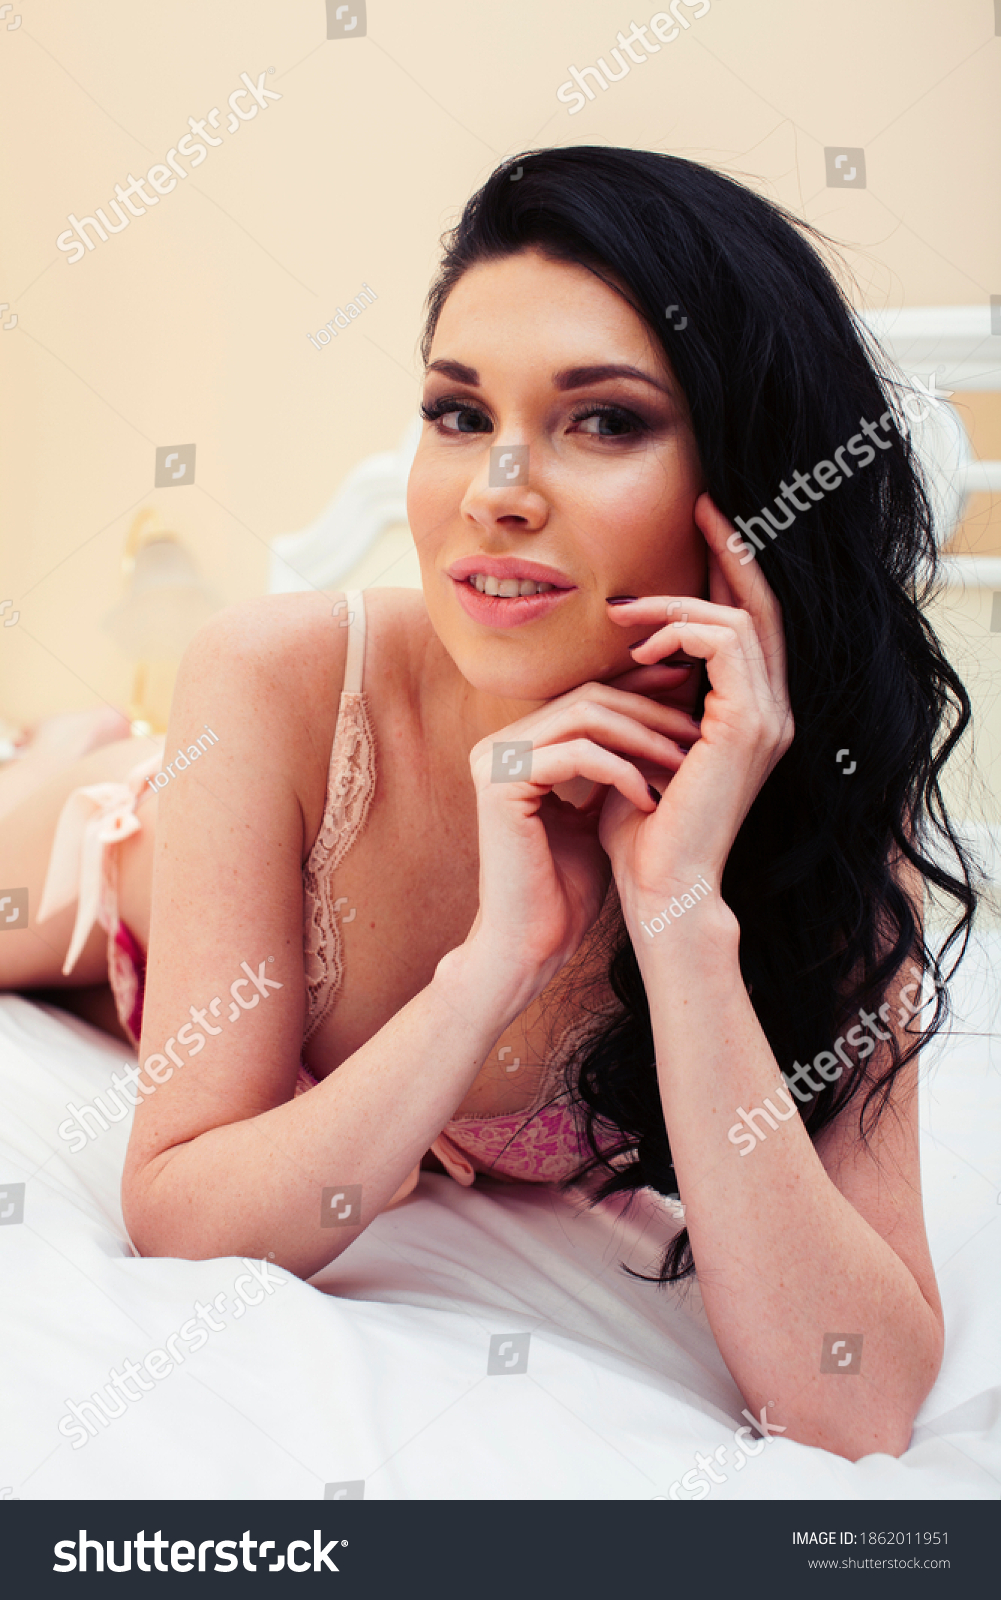 Sexy Sch Ne Brunette Frau Im Bett Stockfoto Shutterstock